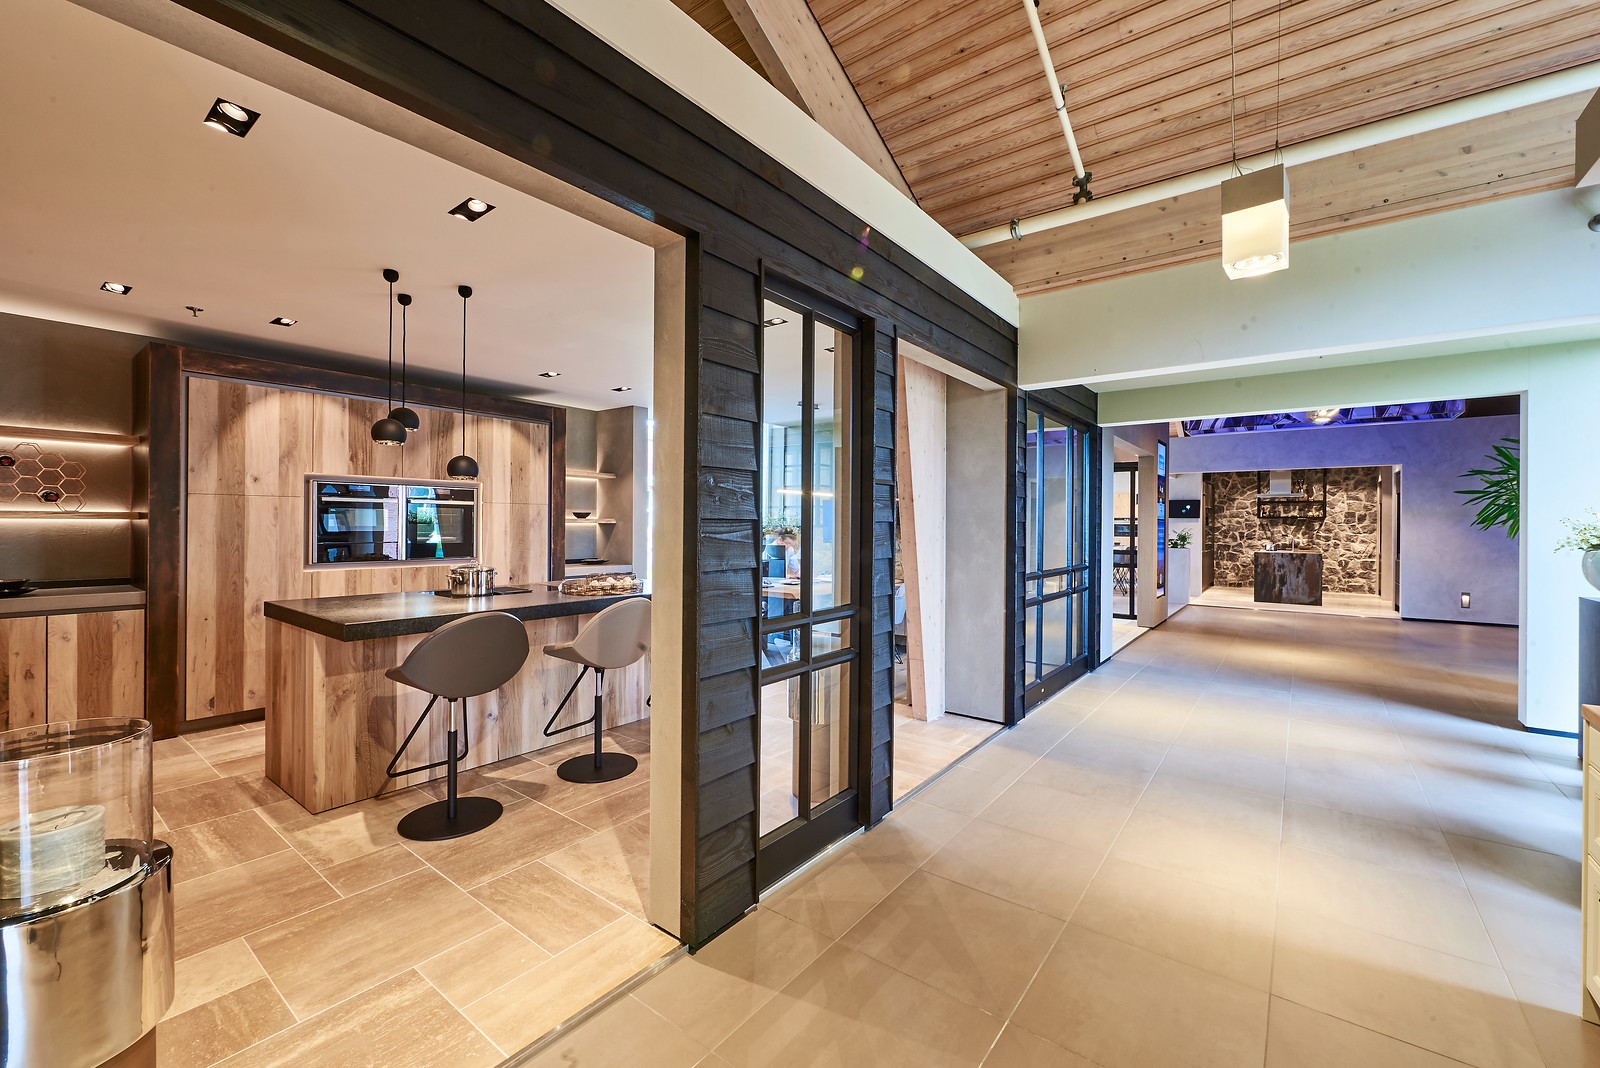 Foto: Moderne showroom nieuwe luxe design keukens next125 keukenshowroom tieleman keukens 2